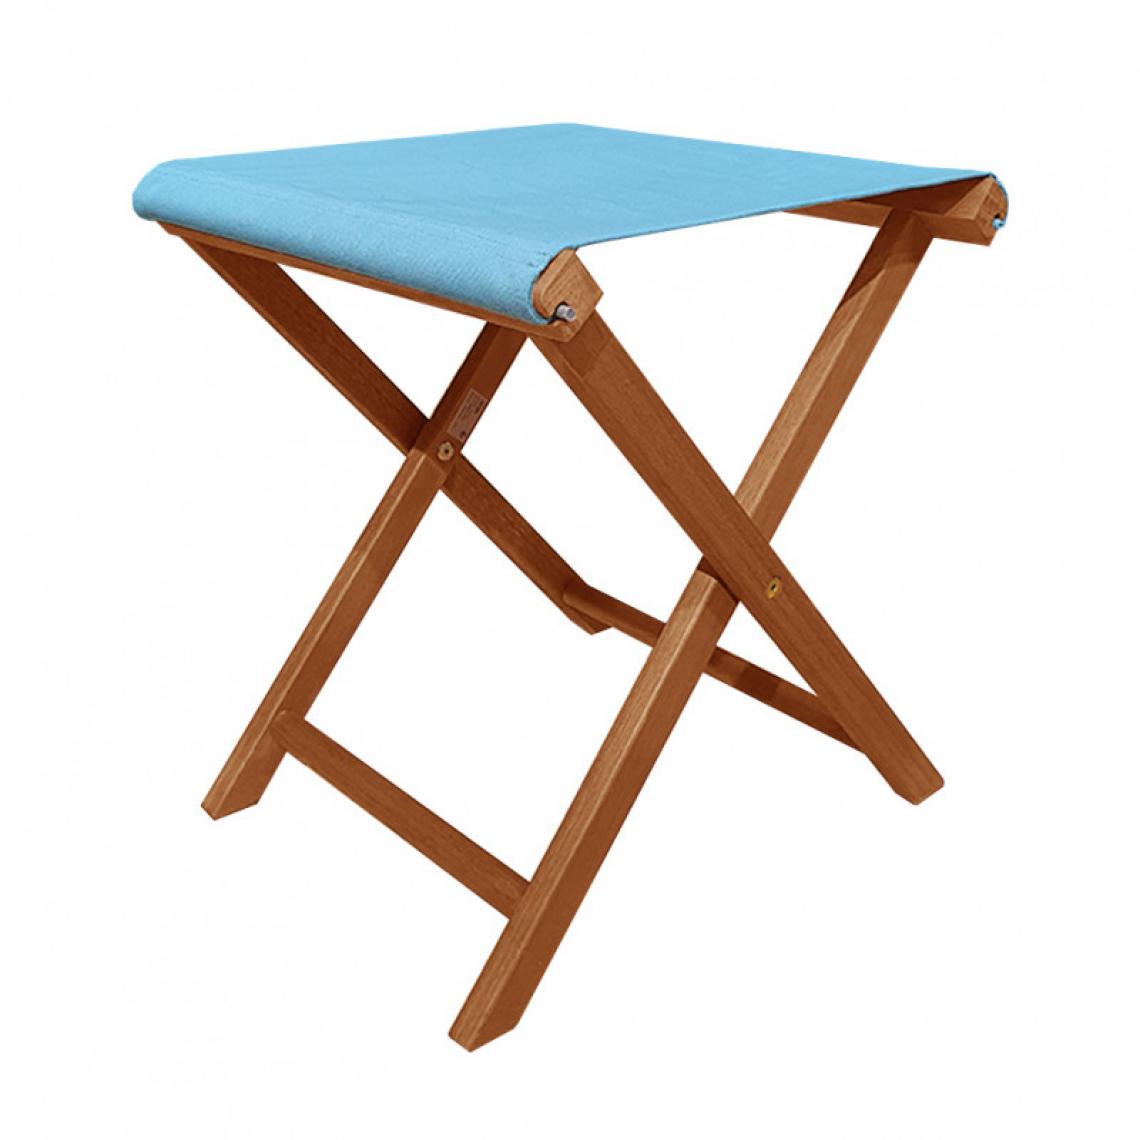 Meubletmoi - Tabouret pliant en bois d'acacia, toile en polyester bleu - LAGO 7891 - Chaises de jardin